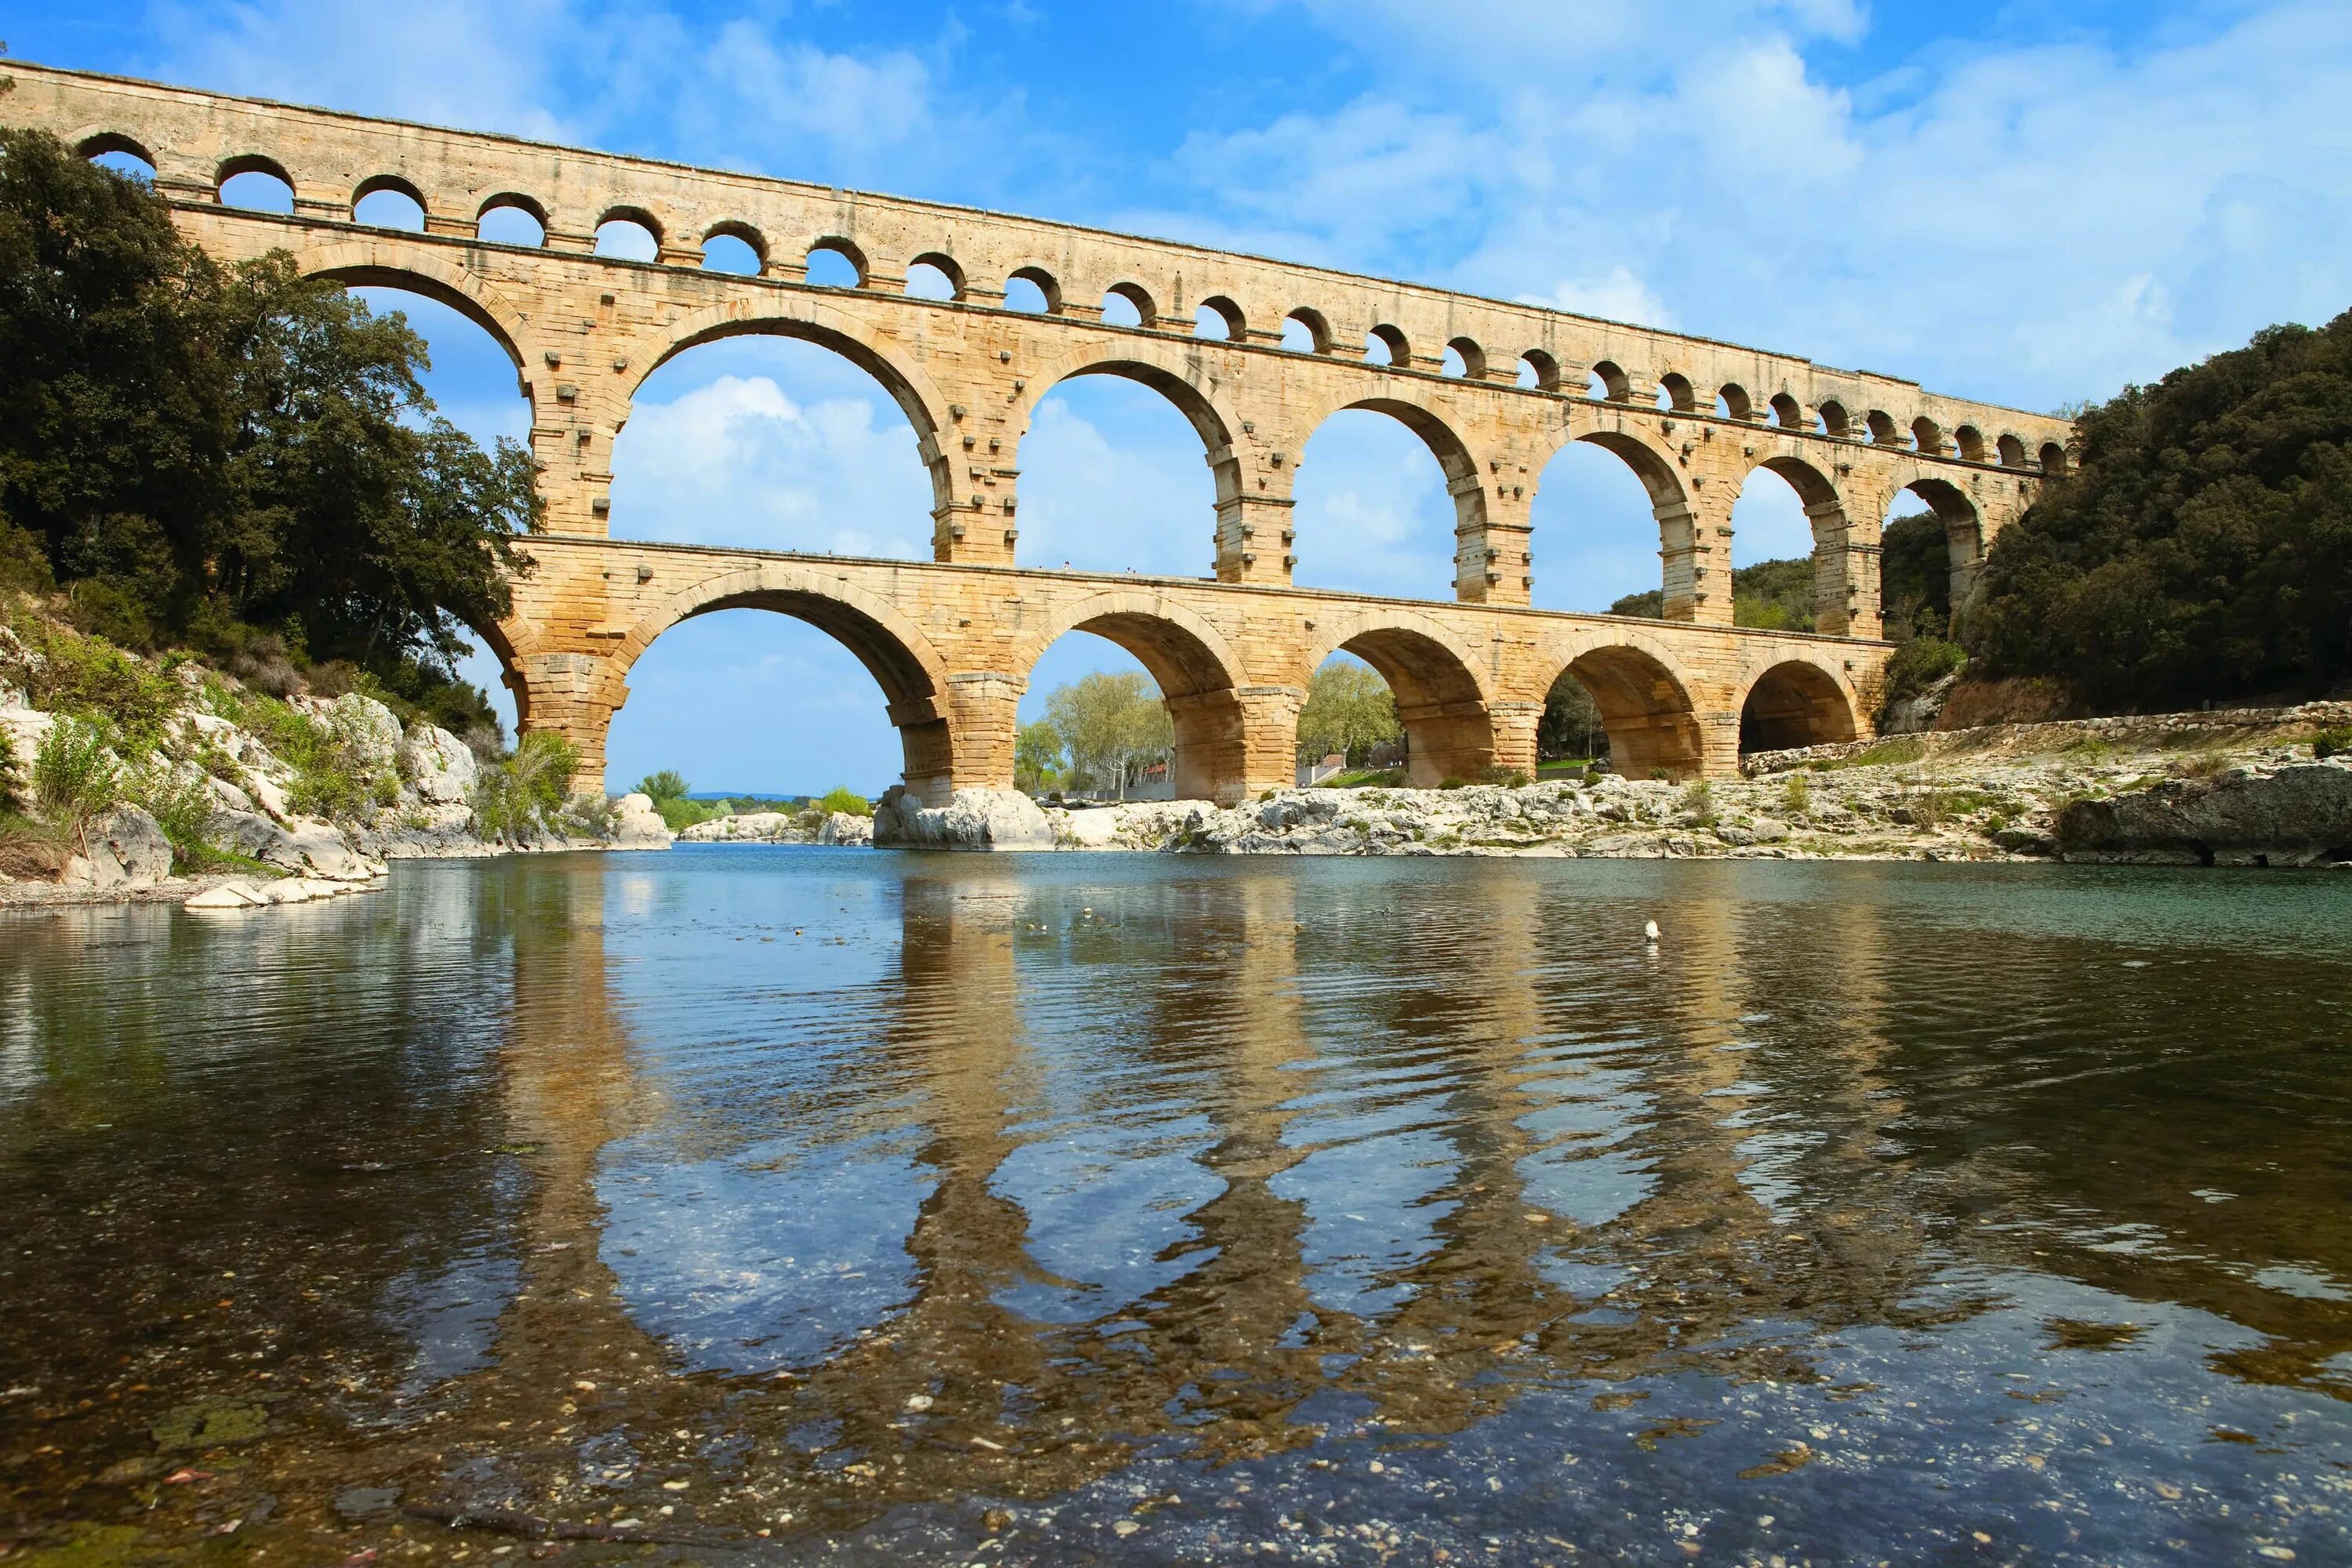 Пон-дю-гар Франция. Пон-дю-гар во Франции. Римский акведук. Акведук Пон дю-гар на юге Франции. Акведуки древнего Рима Пон дю гар.